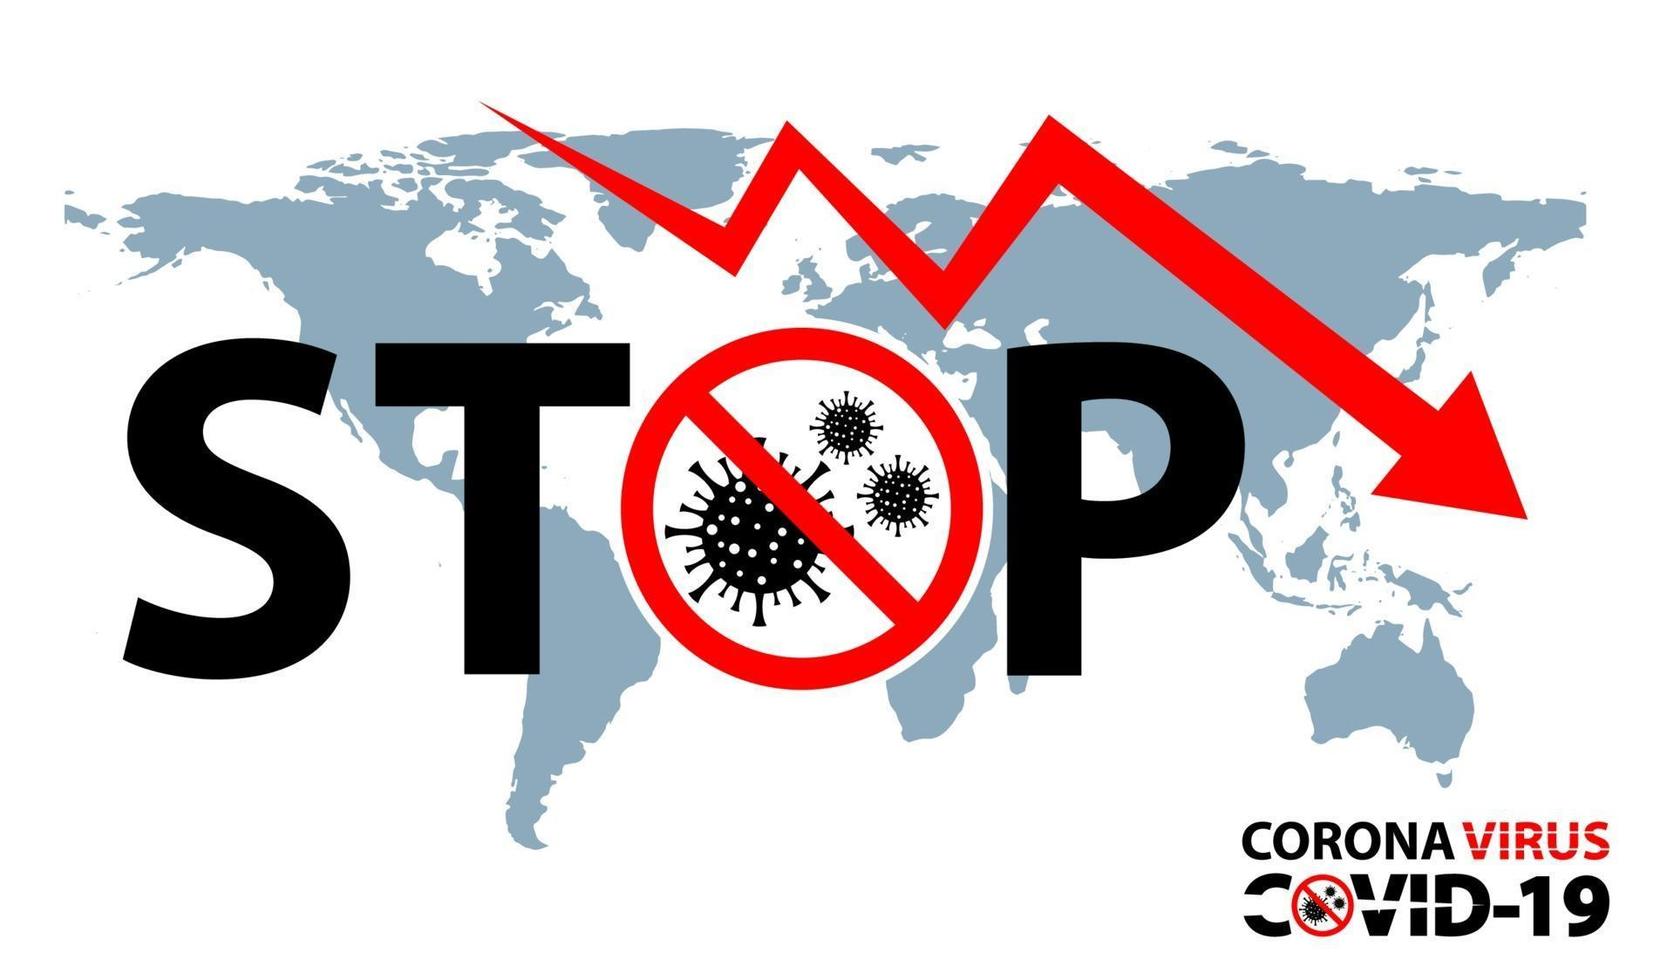 tekst stop waarschuwingsbord coronavirus covid 19 op kaart aarde vector